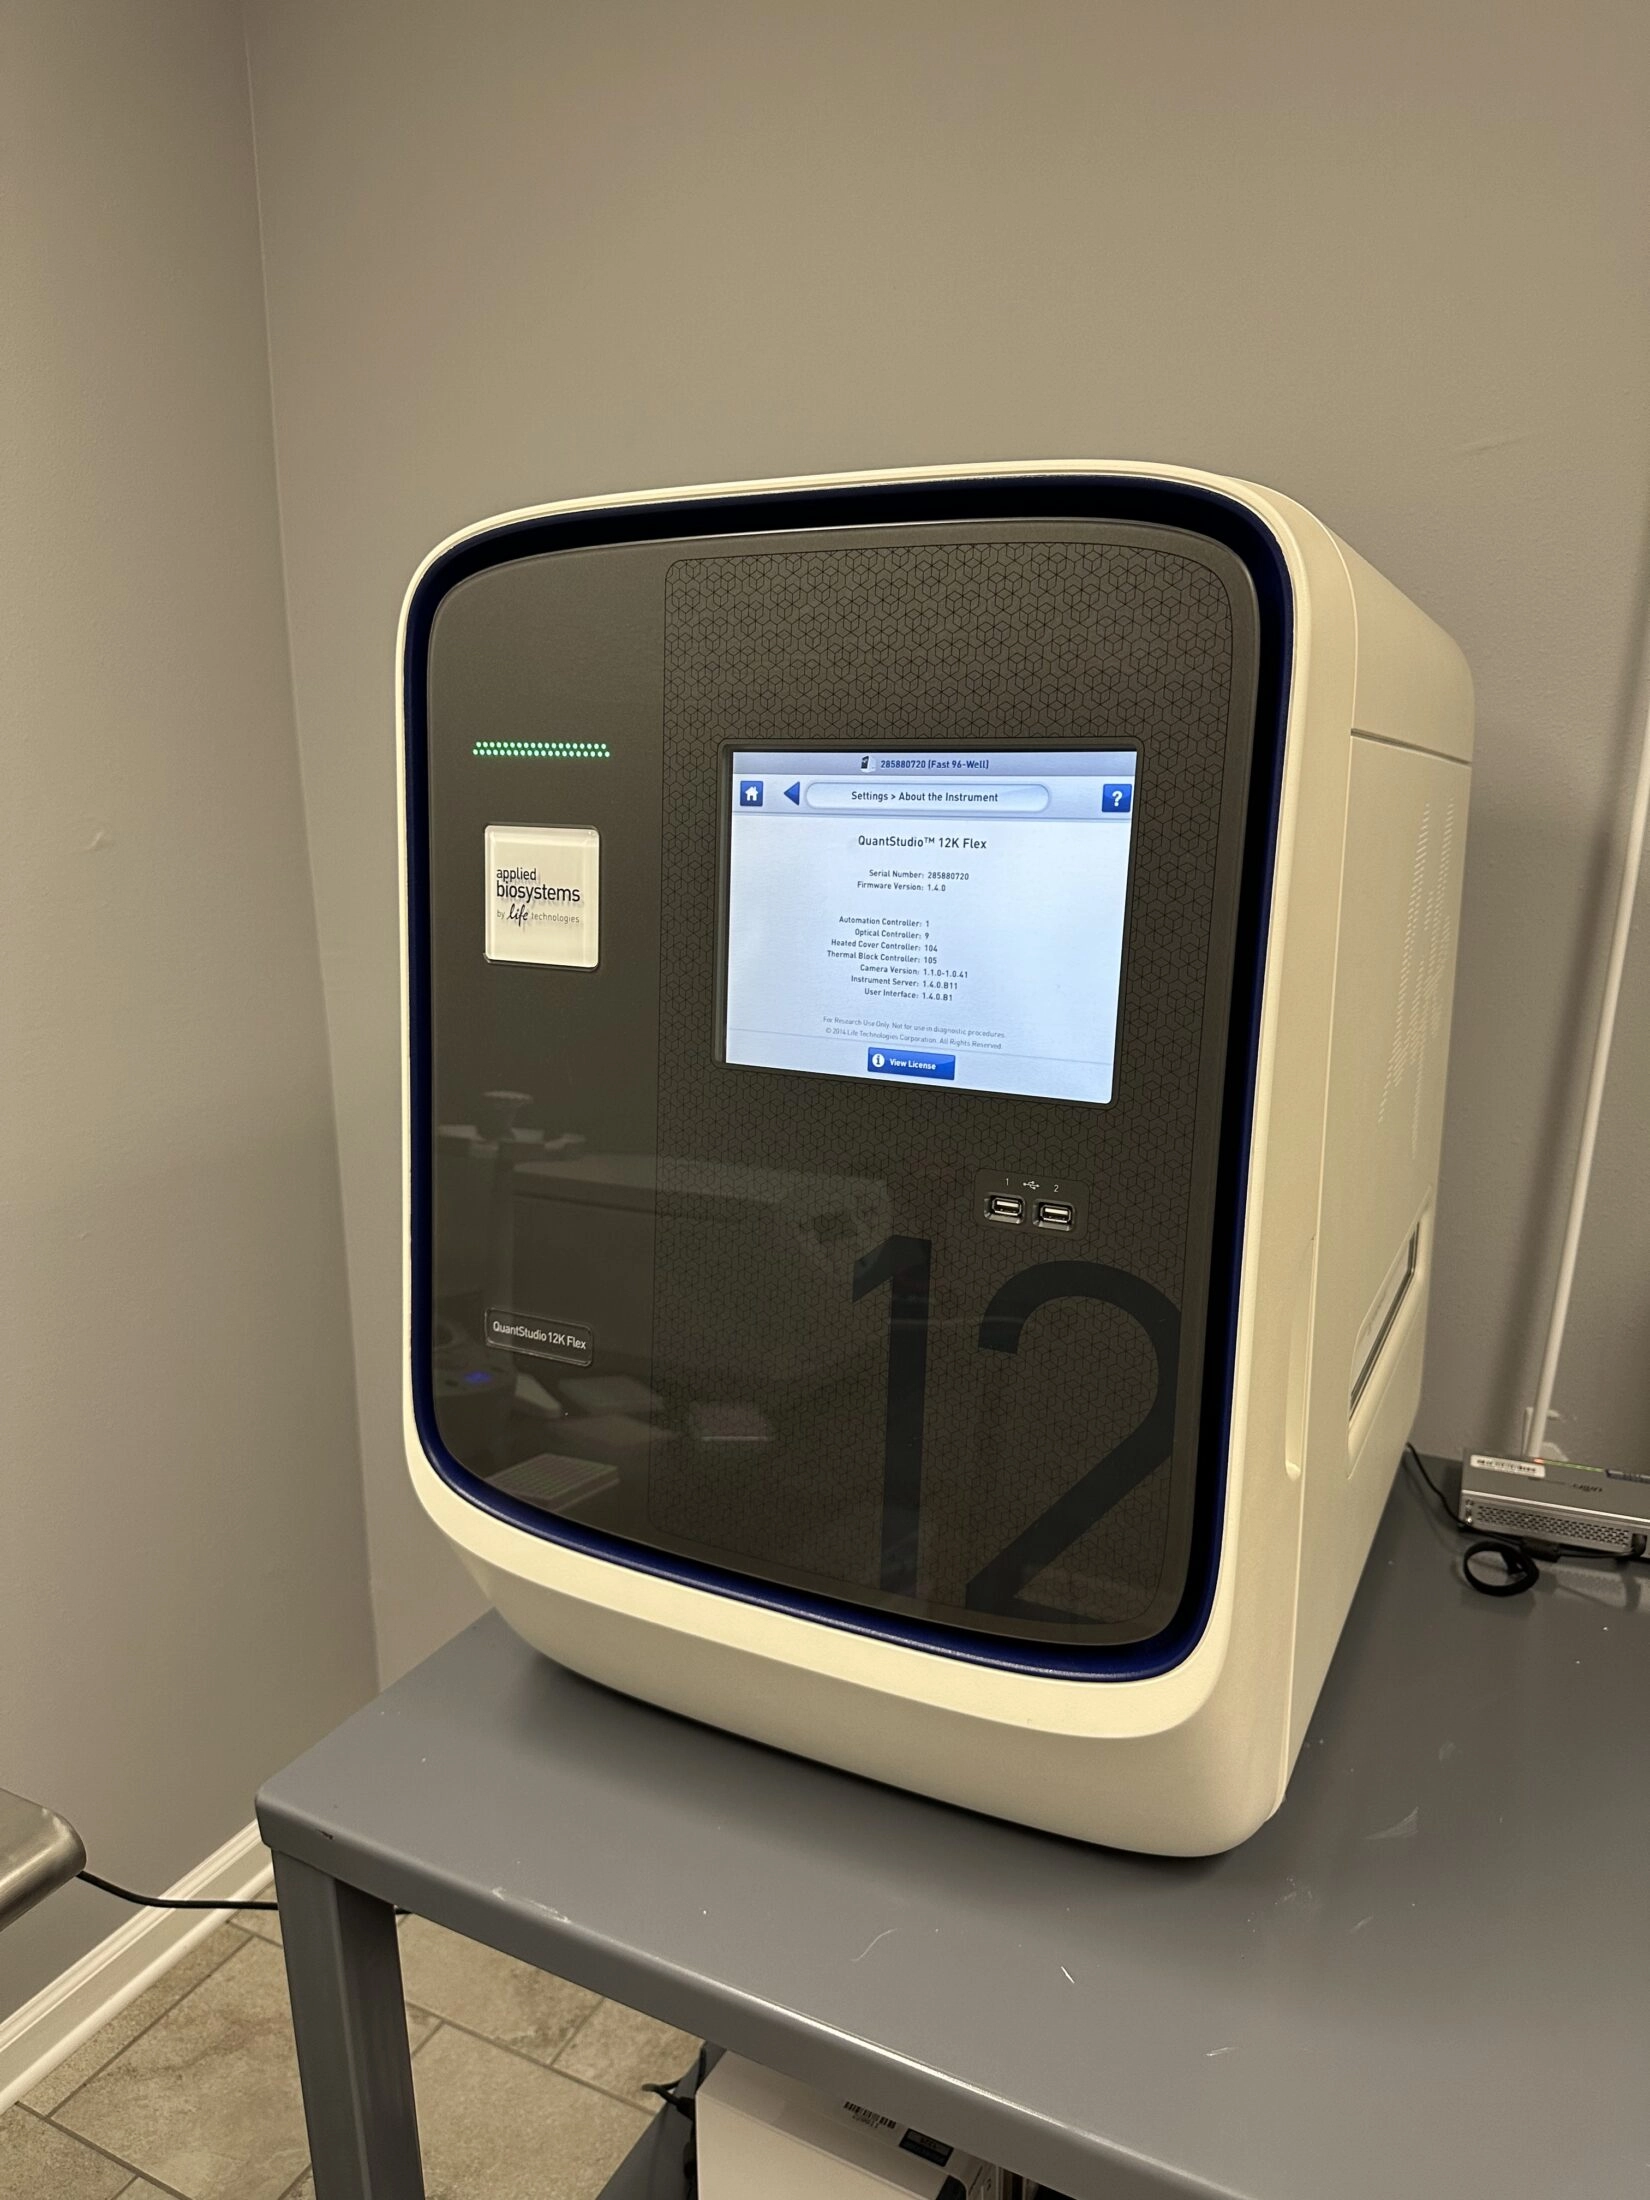 Thermo QuantStudio 12K Flex Real-Time PCR System, OpenArray block